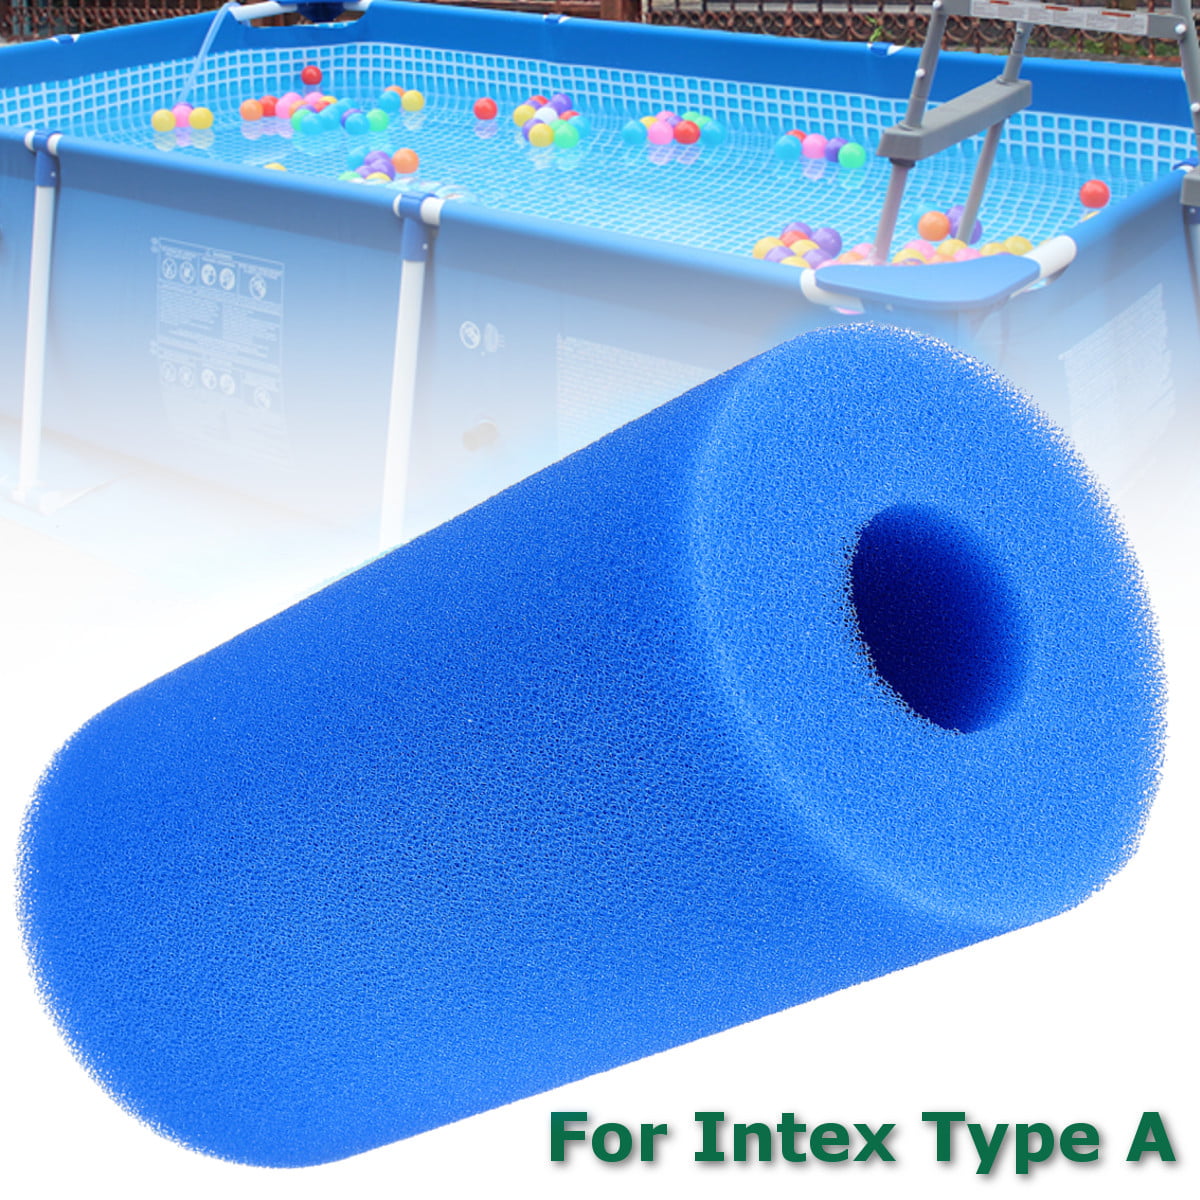 Houkiper Filter Sponge 3pcs For Intex Type A Reusable//Washable Swimming Pool Filter Foam Cartridge Sponge